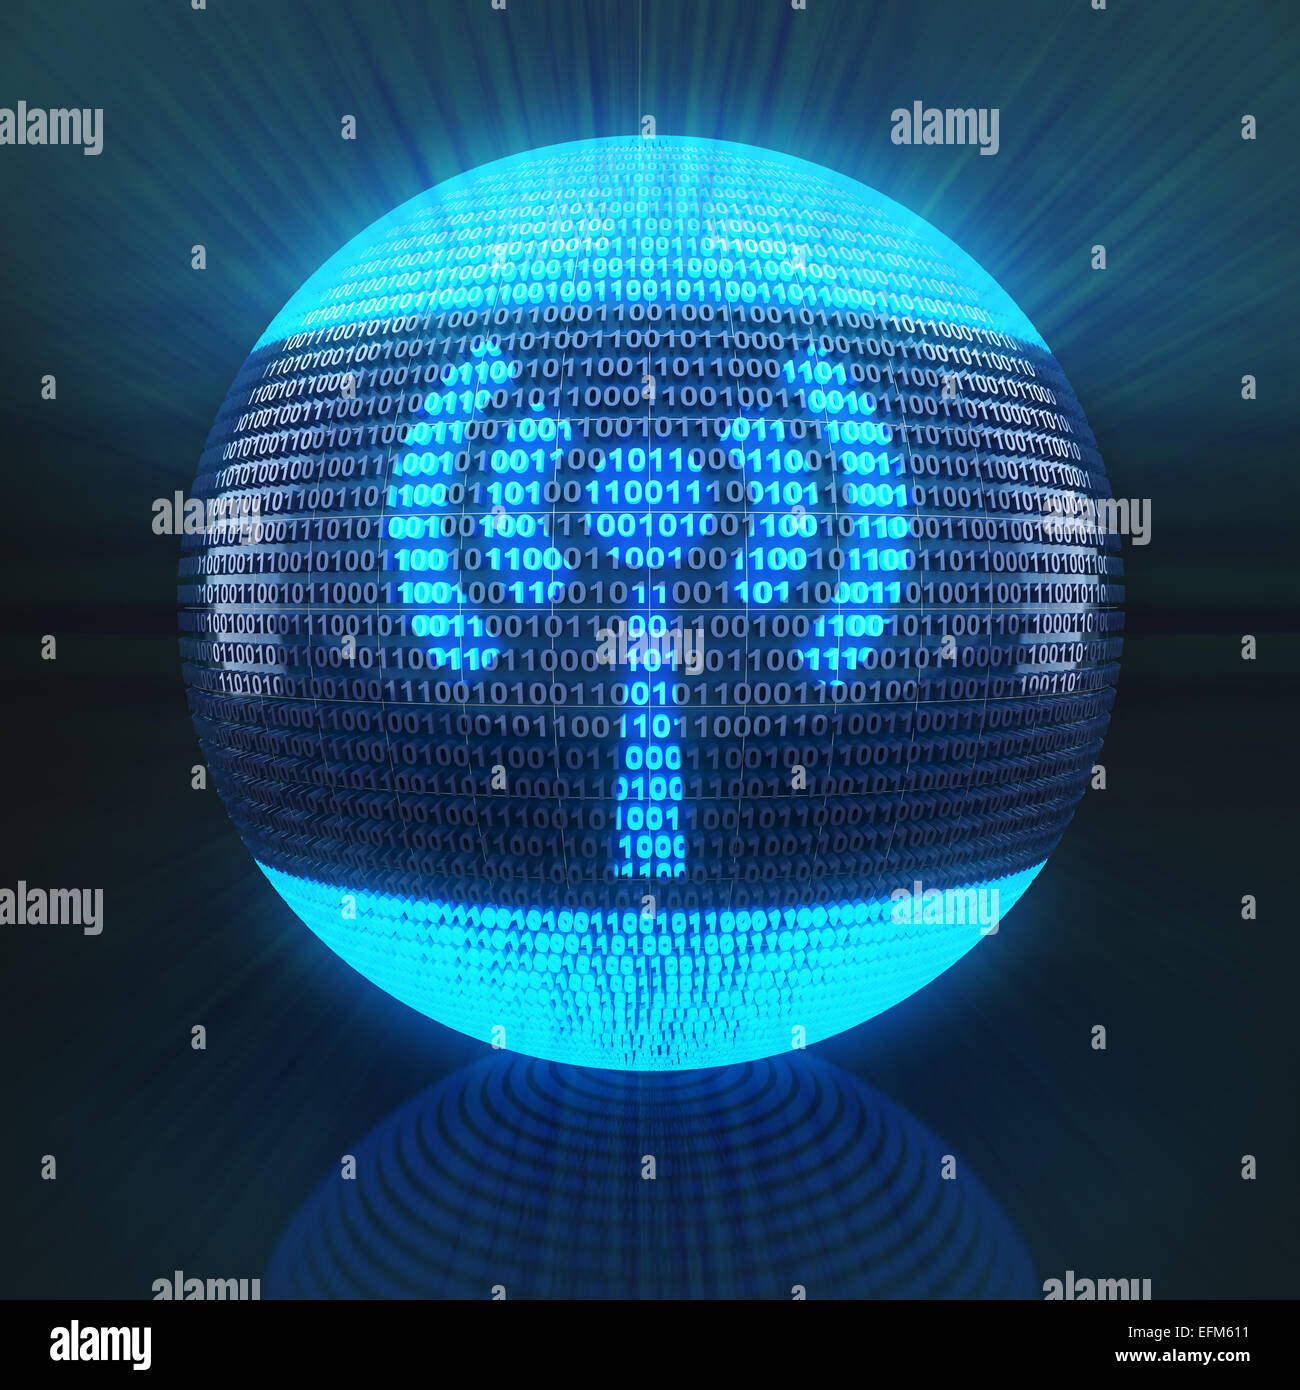 Wifi symbol on globe formed by binary code Stock Photo